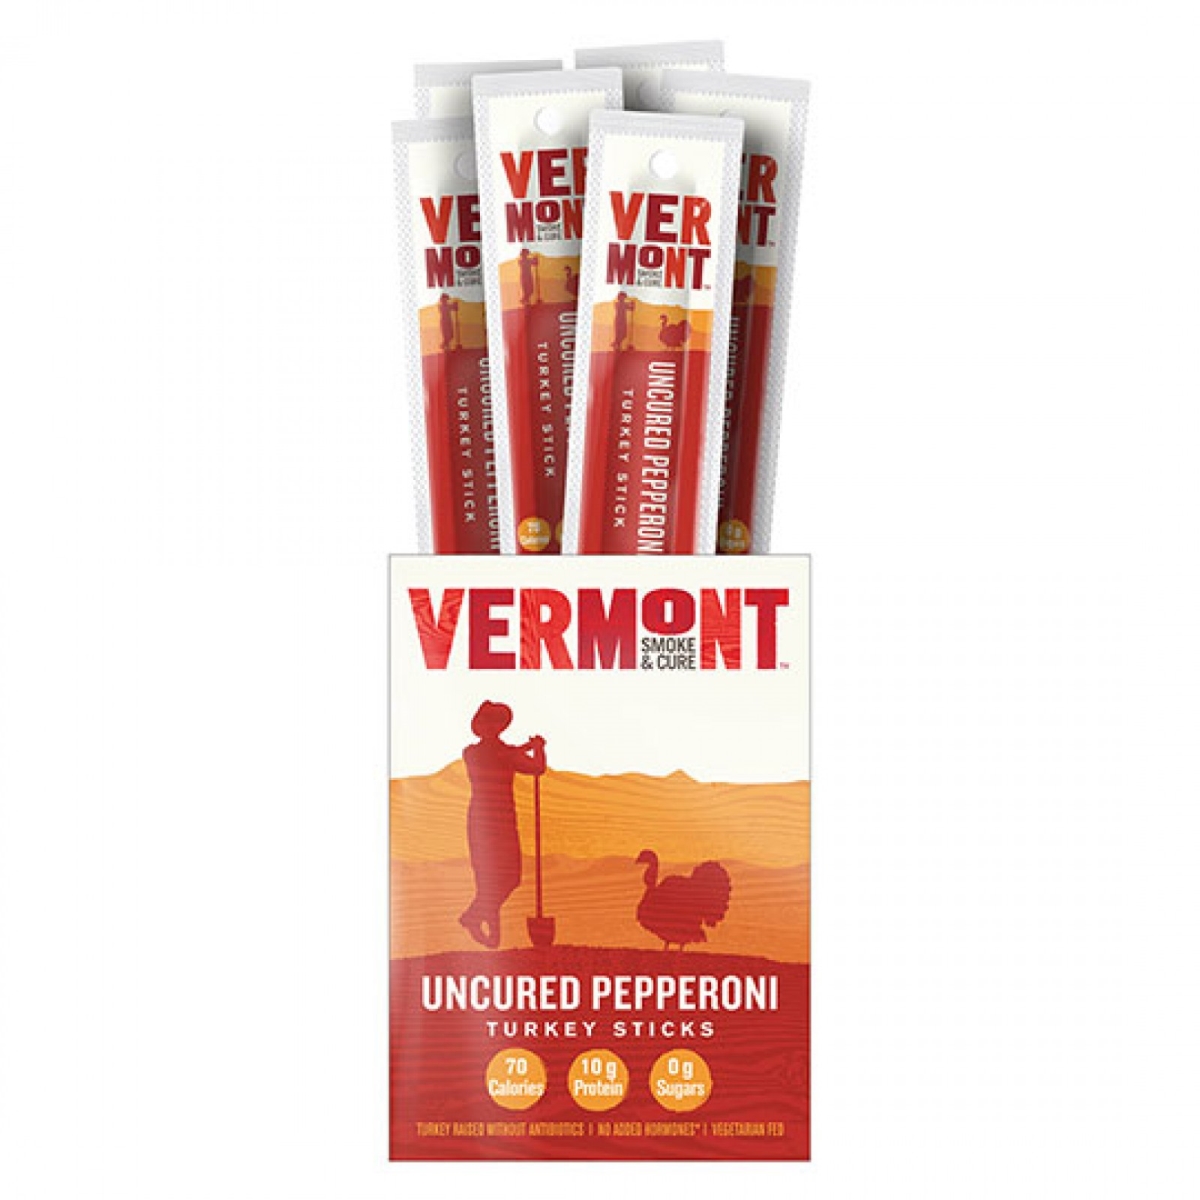 231342 1 Oz Vermont Smoke & Cure Uncured Pepperoni Turkey Sticks